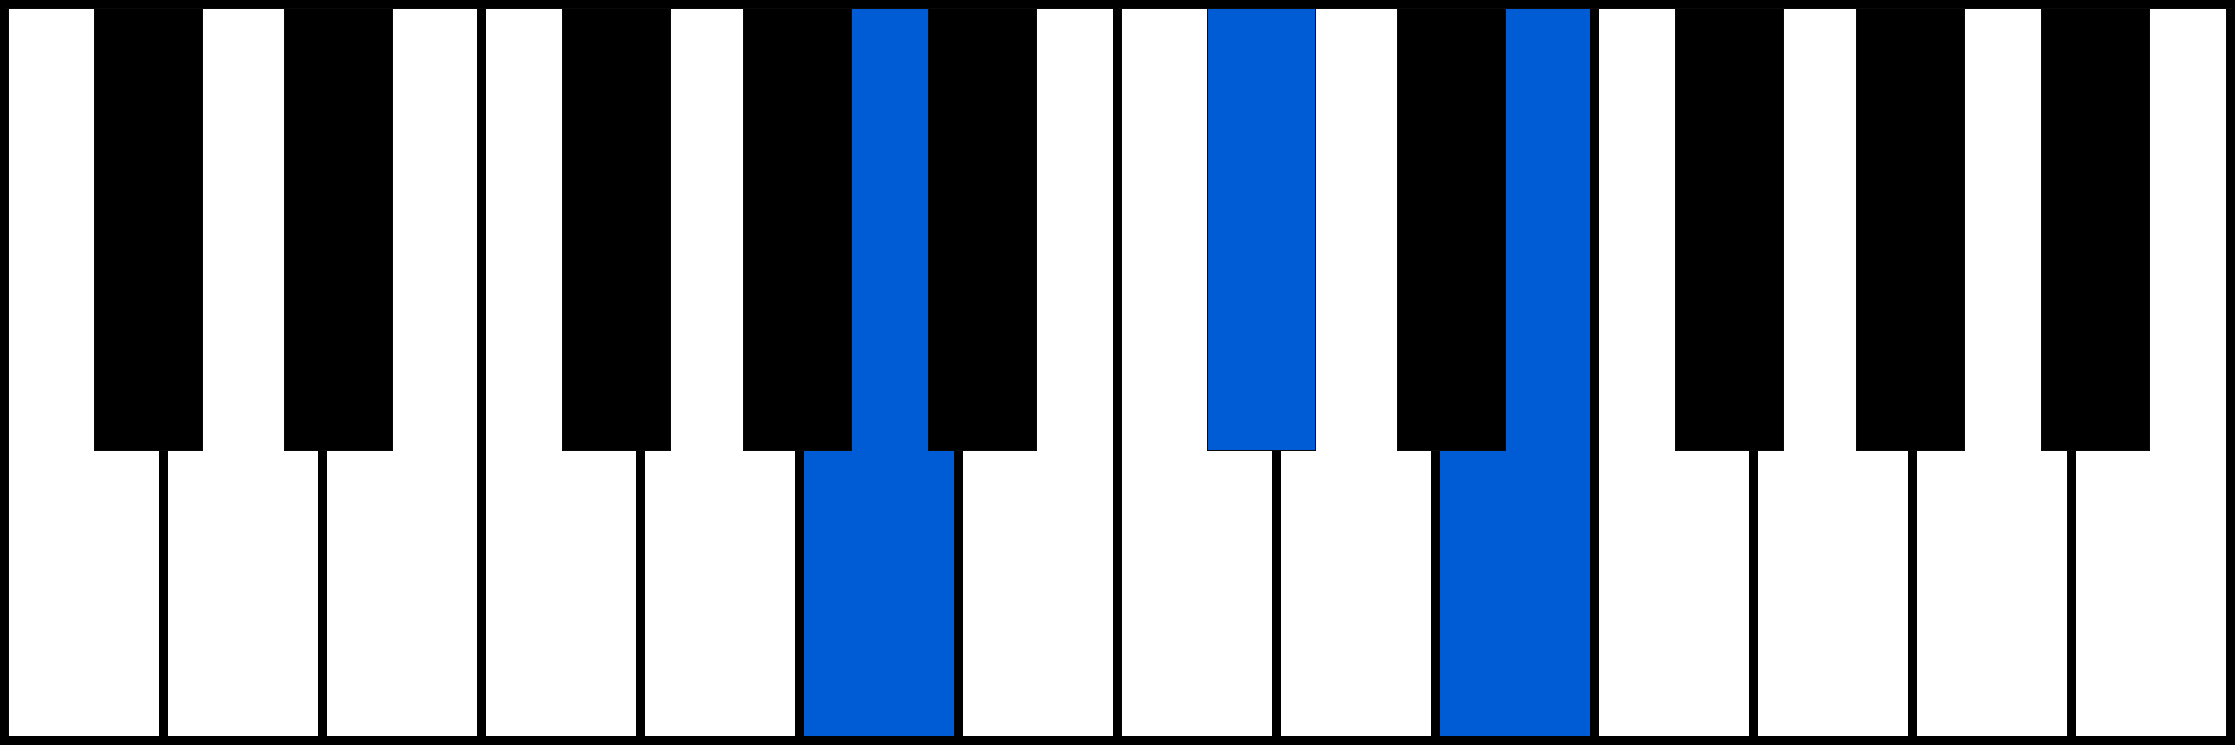 A piano chord